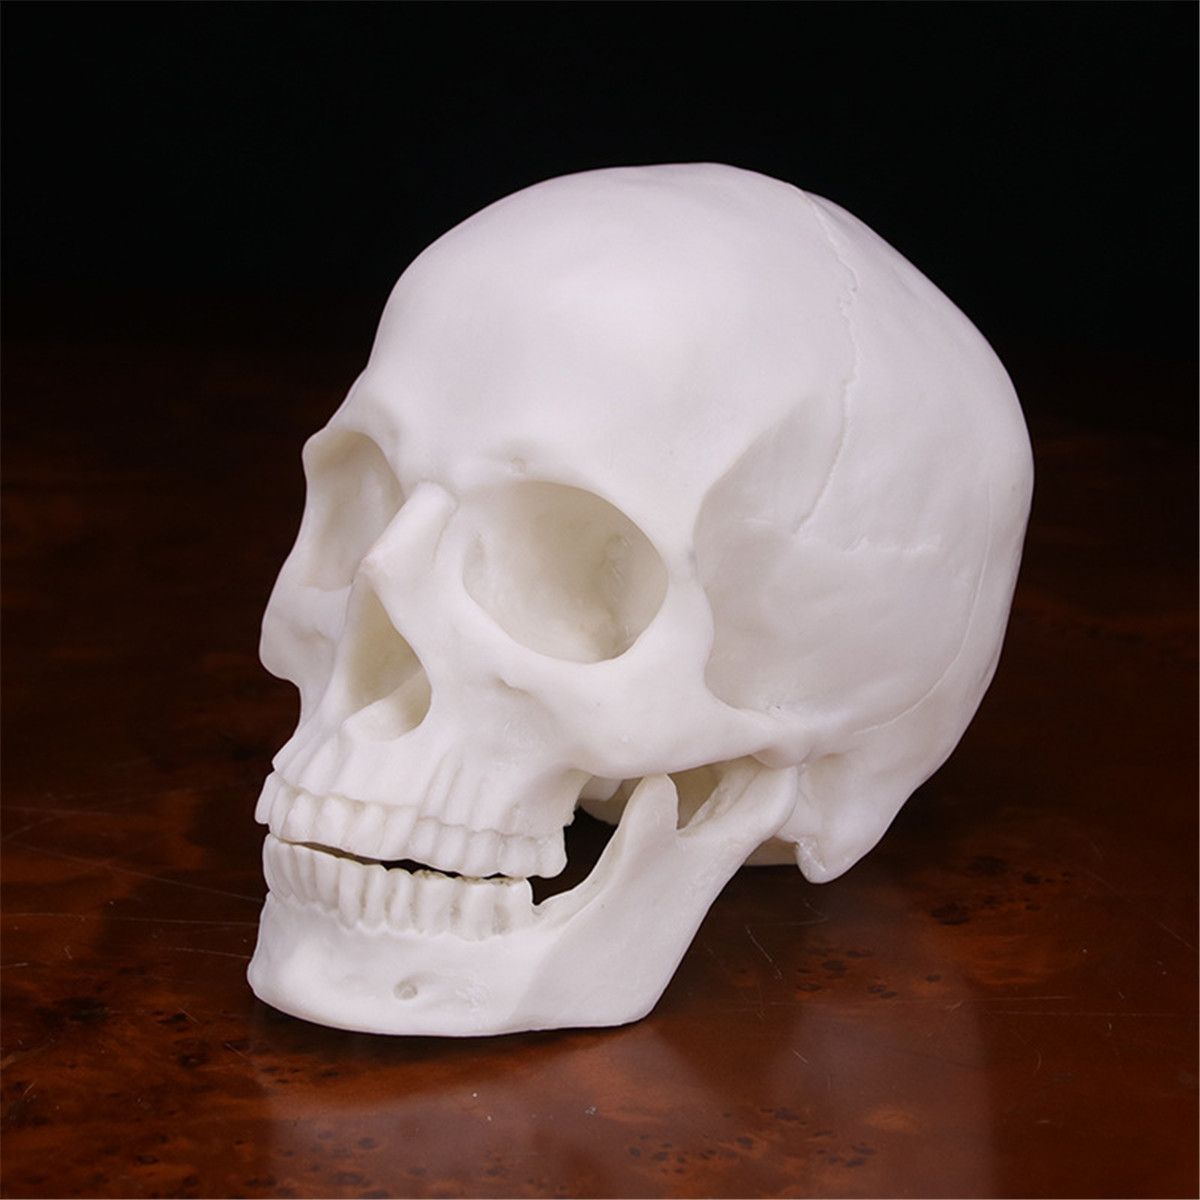 Human-Skull-Handmade-Decoration-Goth-Halloween-Decor-Gift-Souvenirs-Ornament-1713657